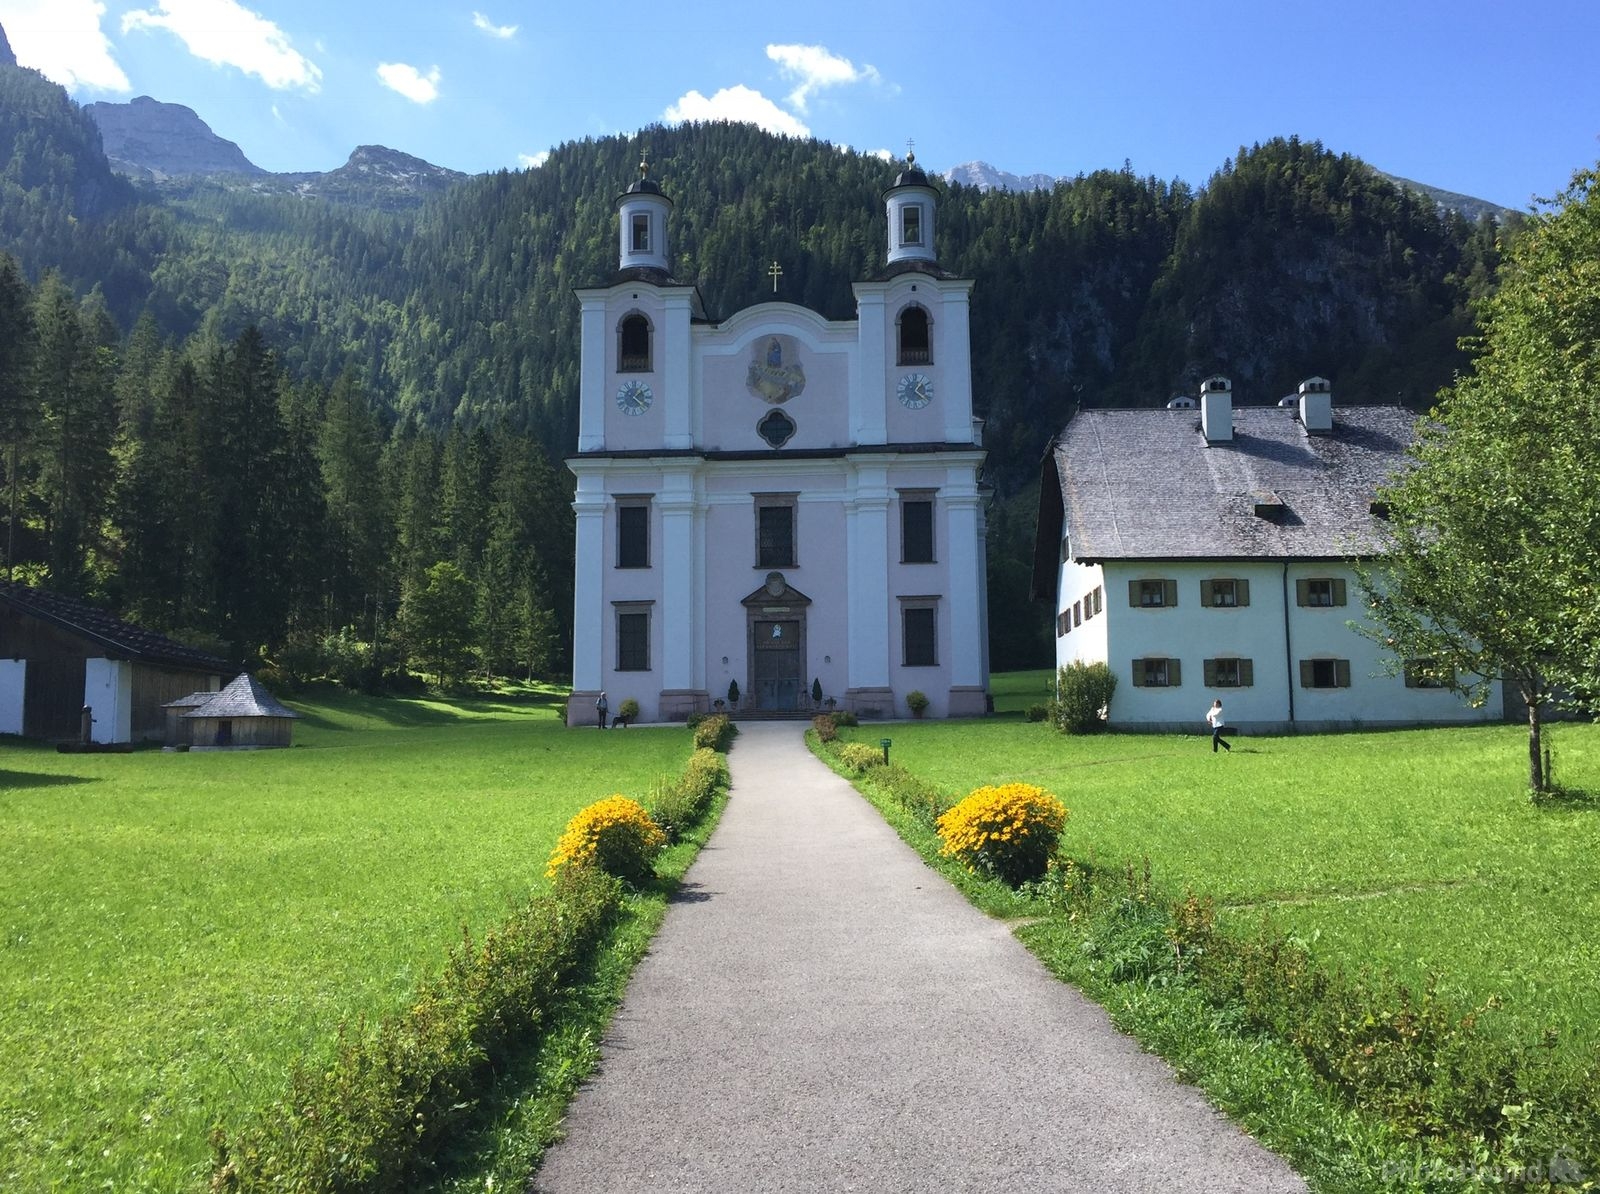 Image of Maria Kirchental Sanctuary by Erwin Kraus